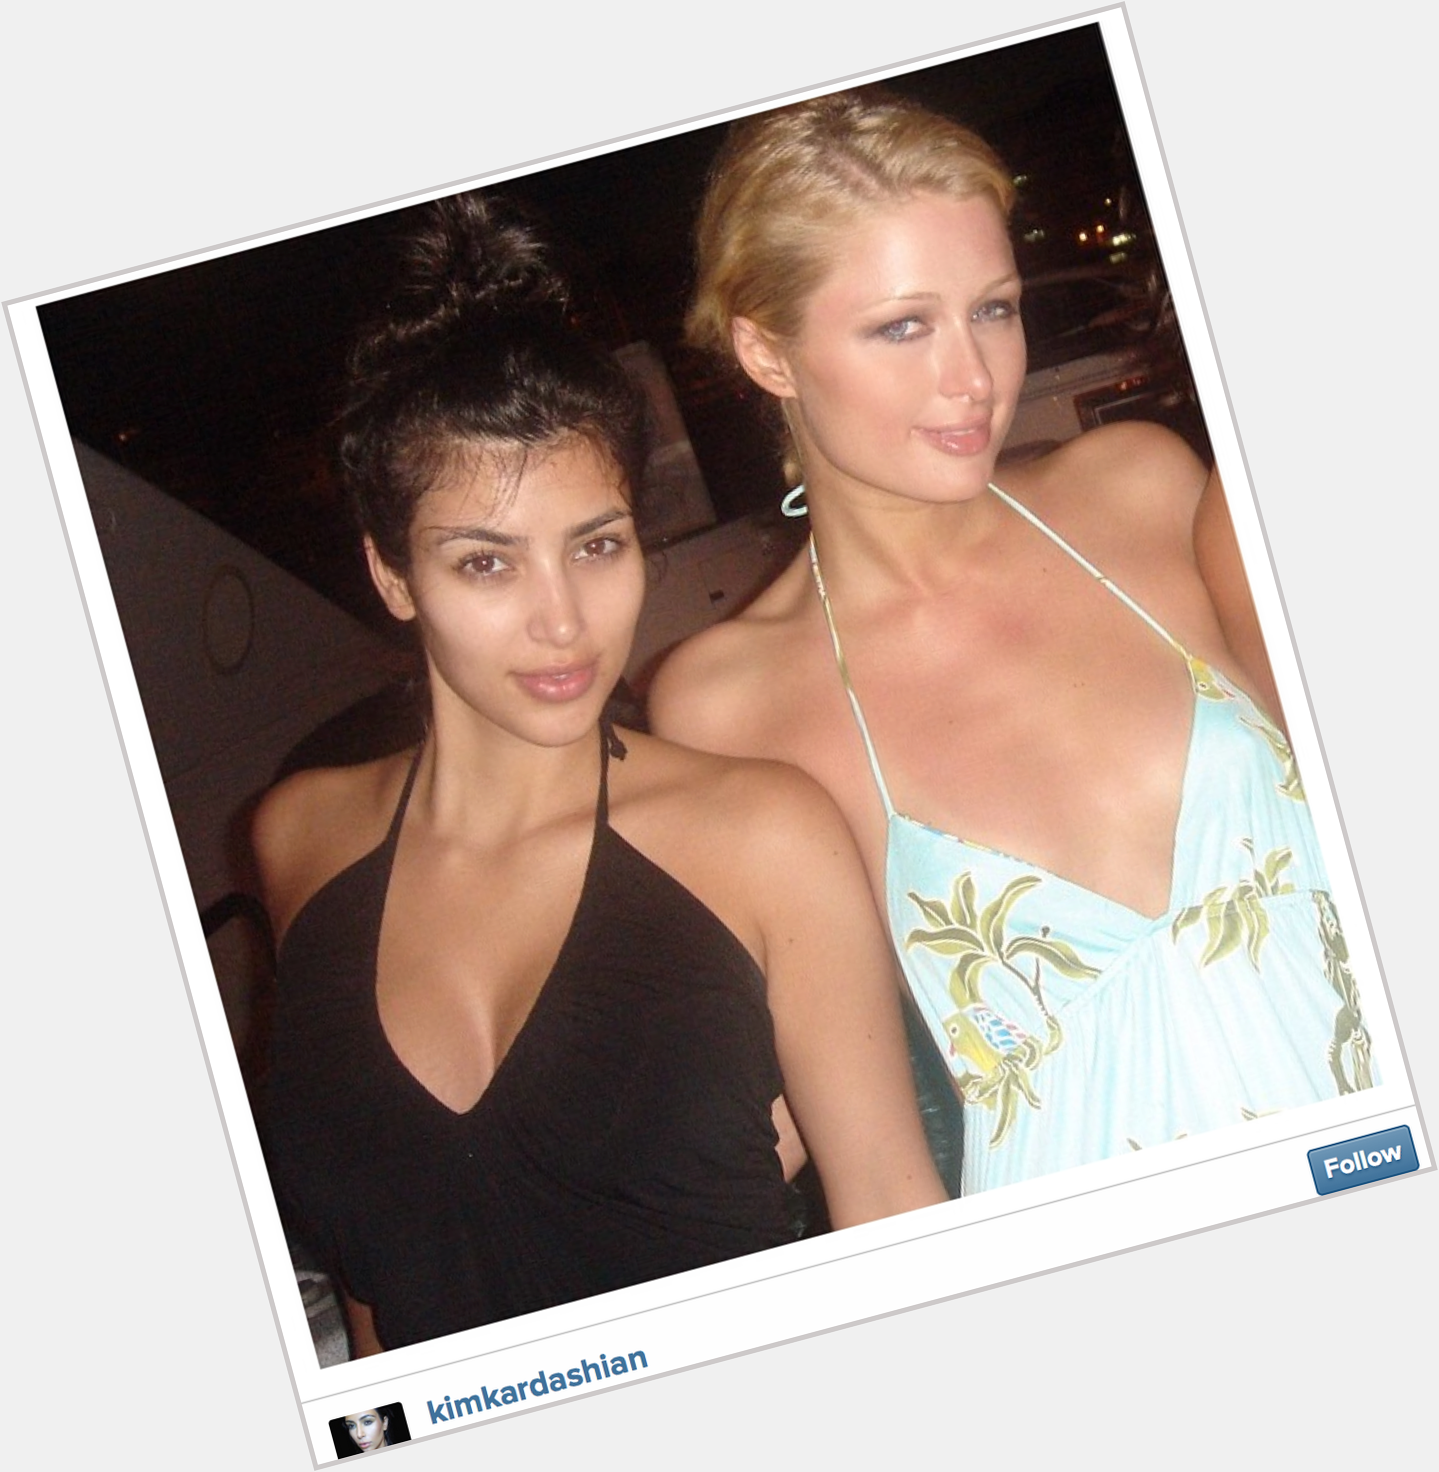 Kim Kardashian and Paris Hilton had their posing sorted back in 2006  